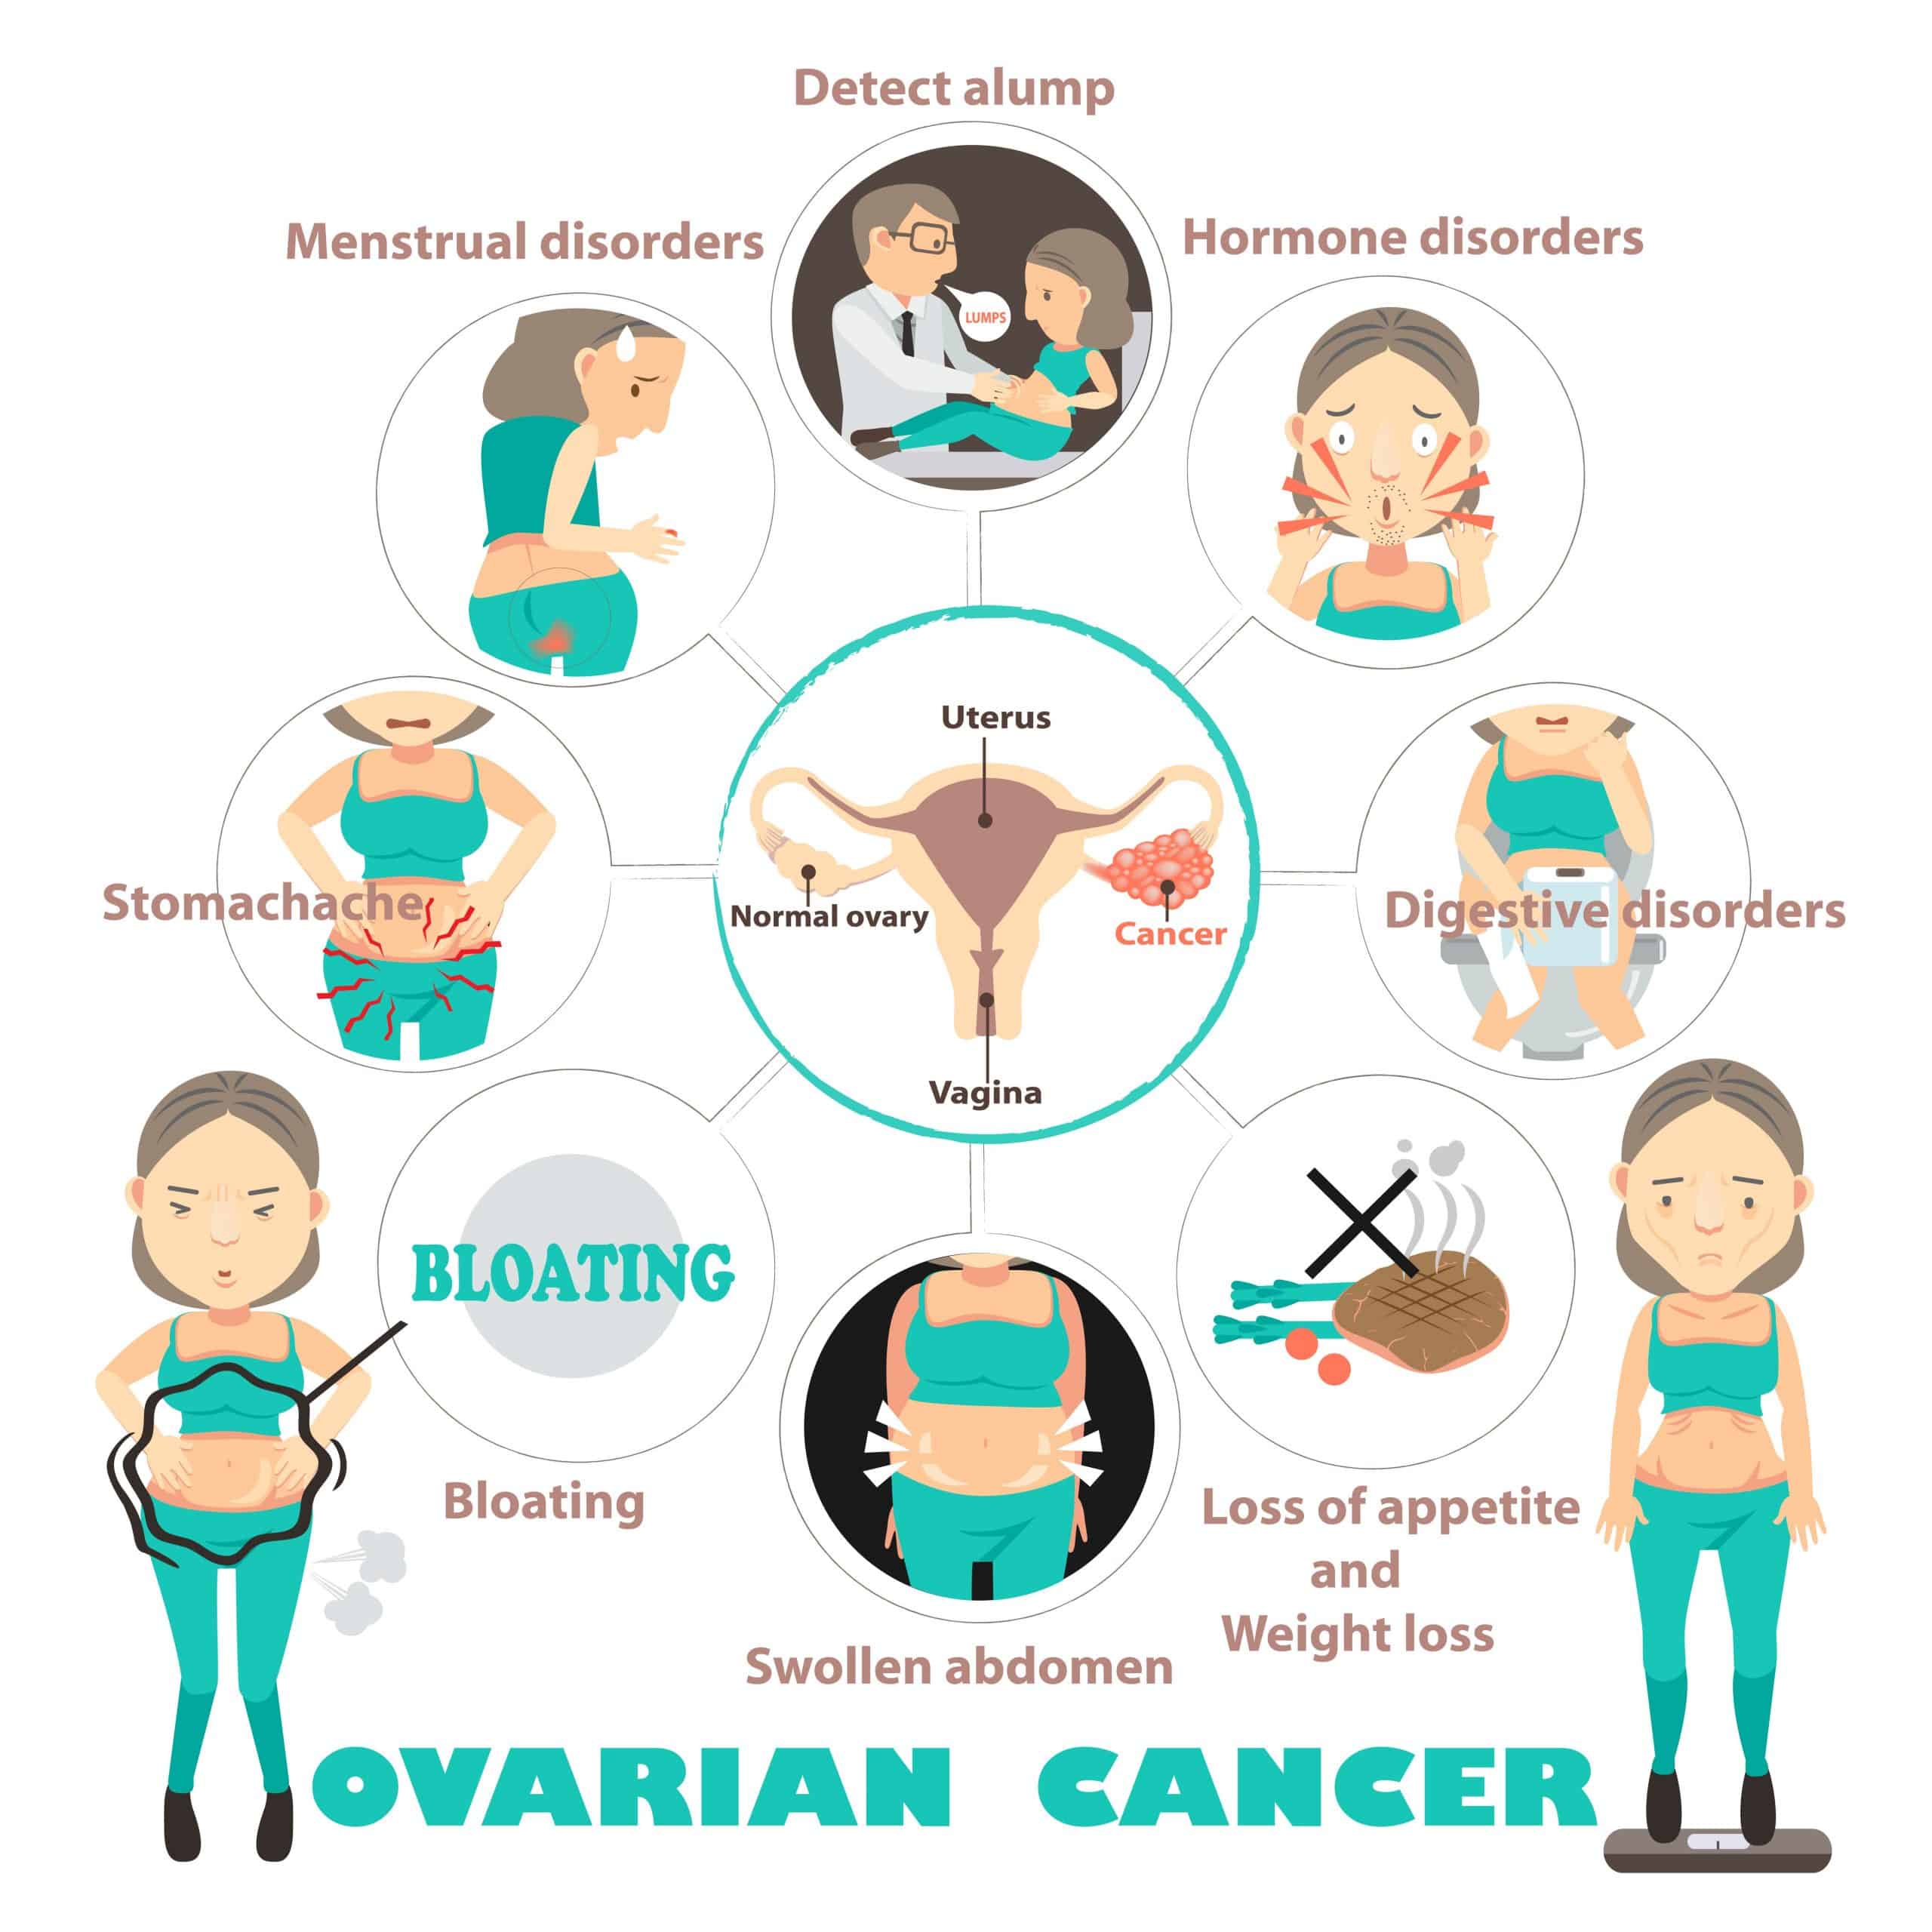 September is Ovarian Cancer Awareness Month